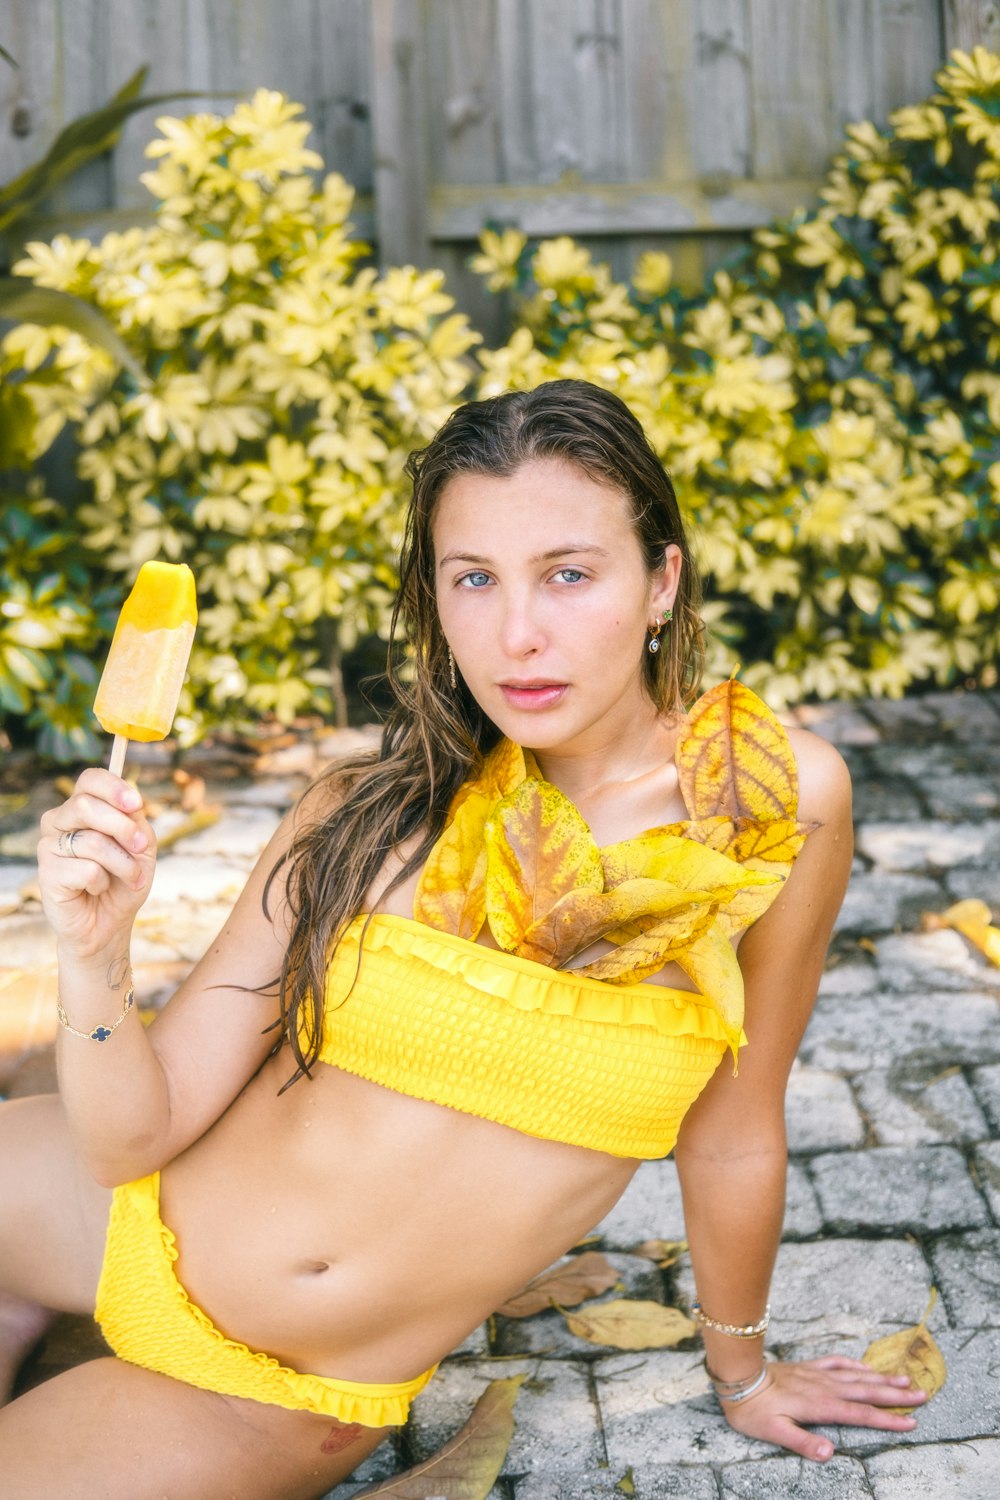 a woman in a yellow bikini holding a banana